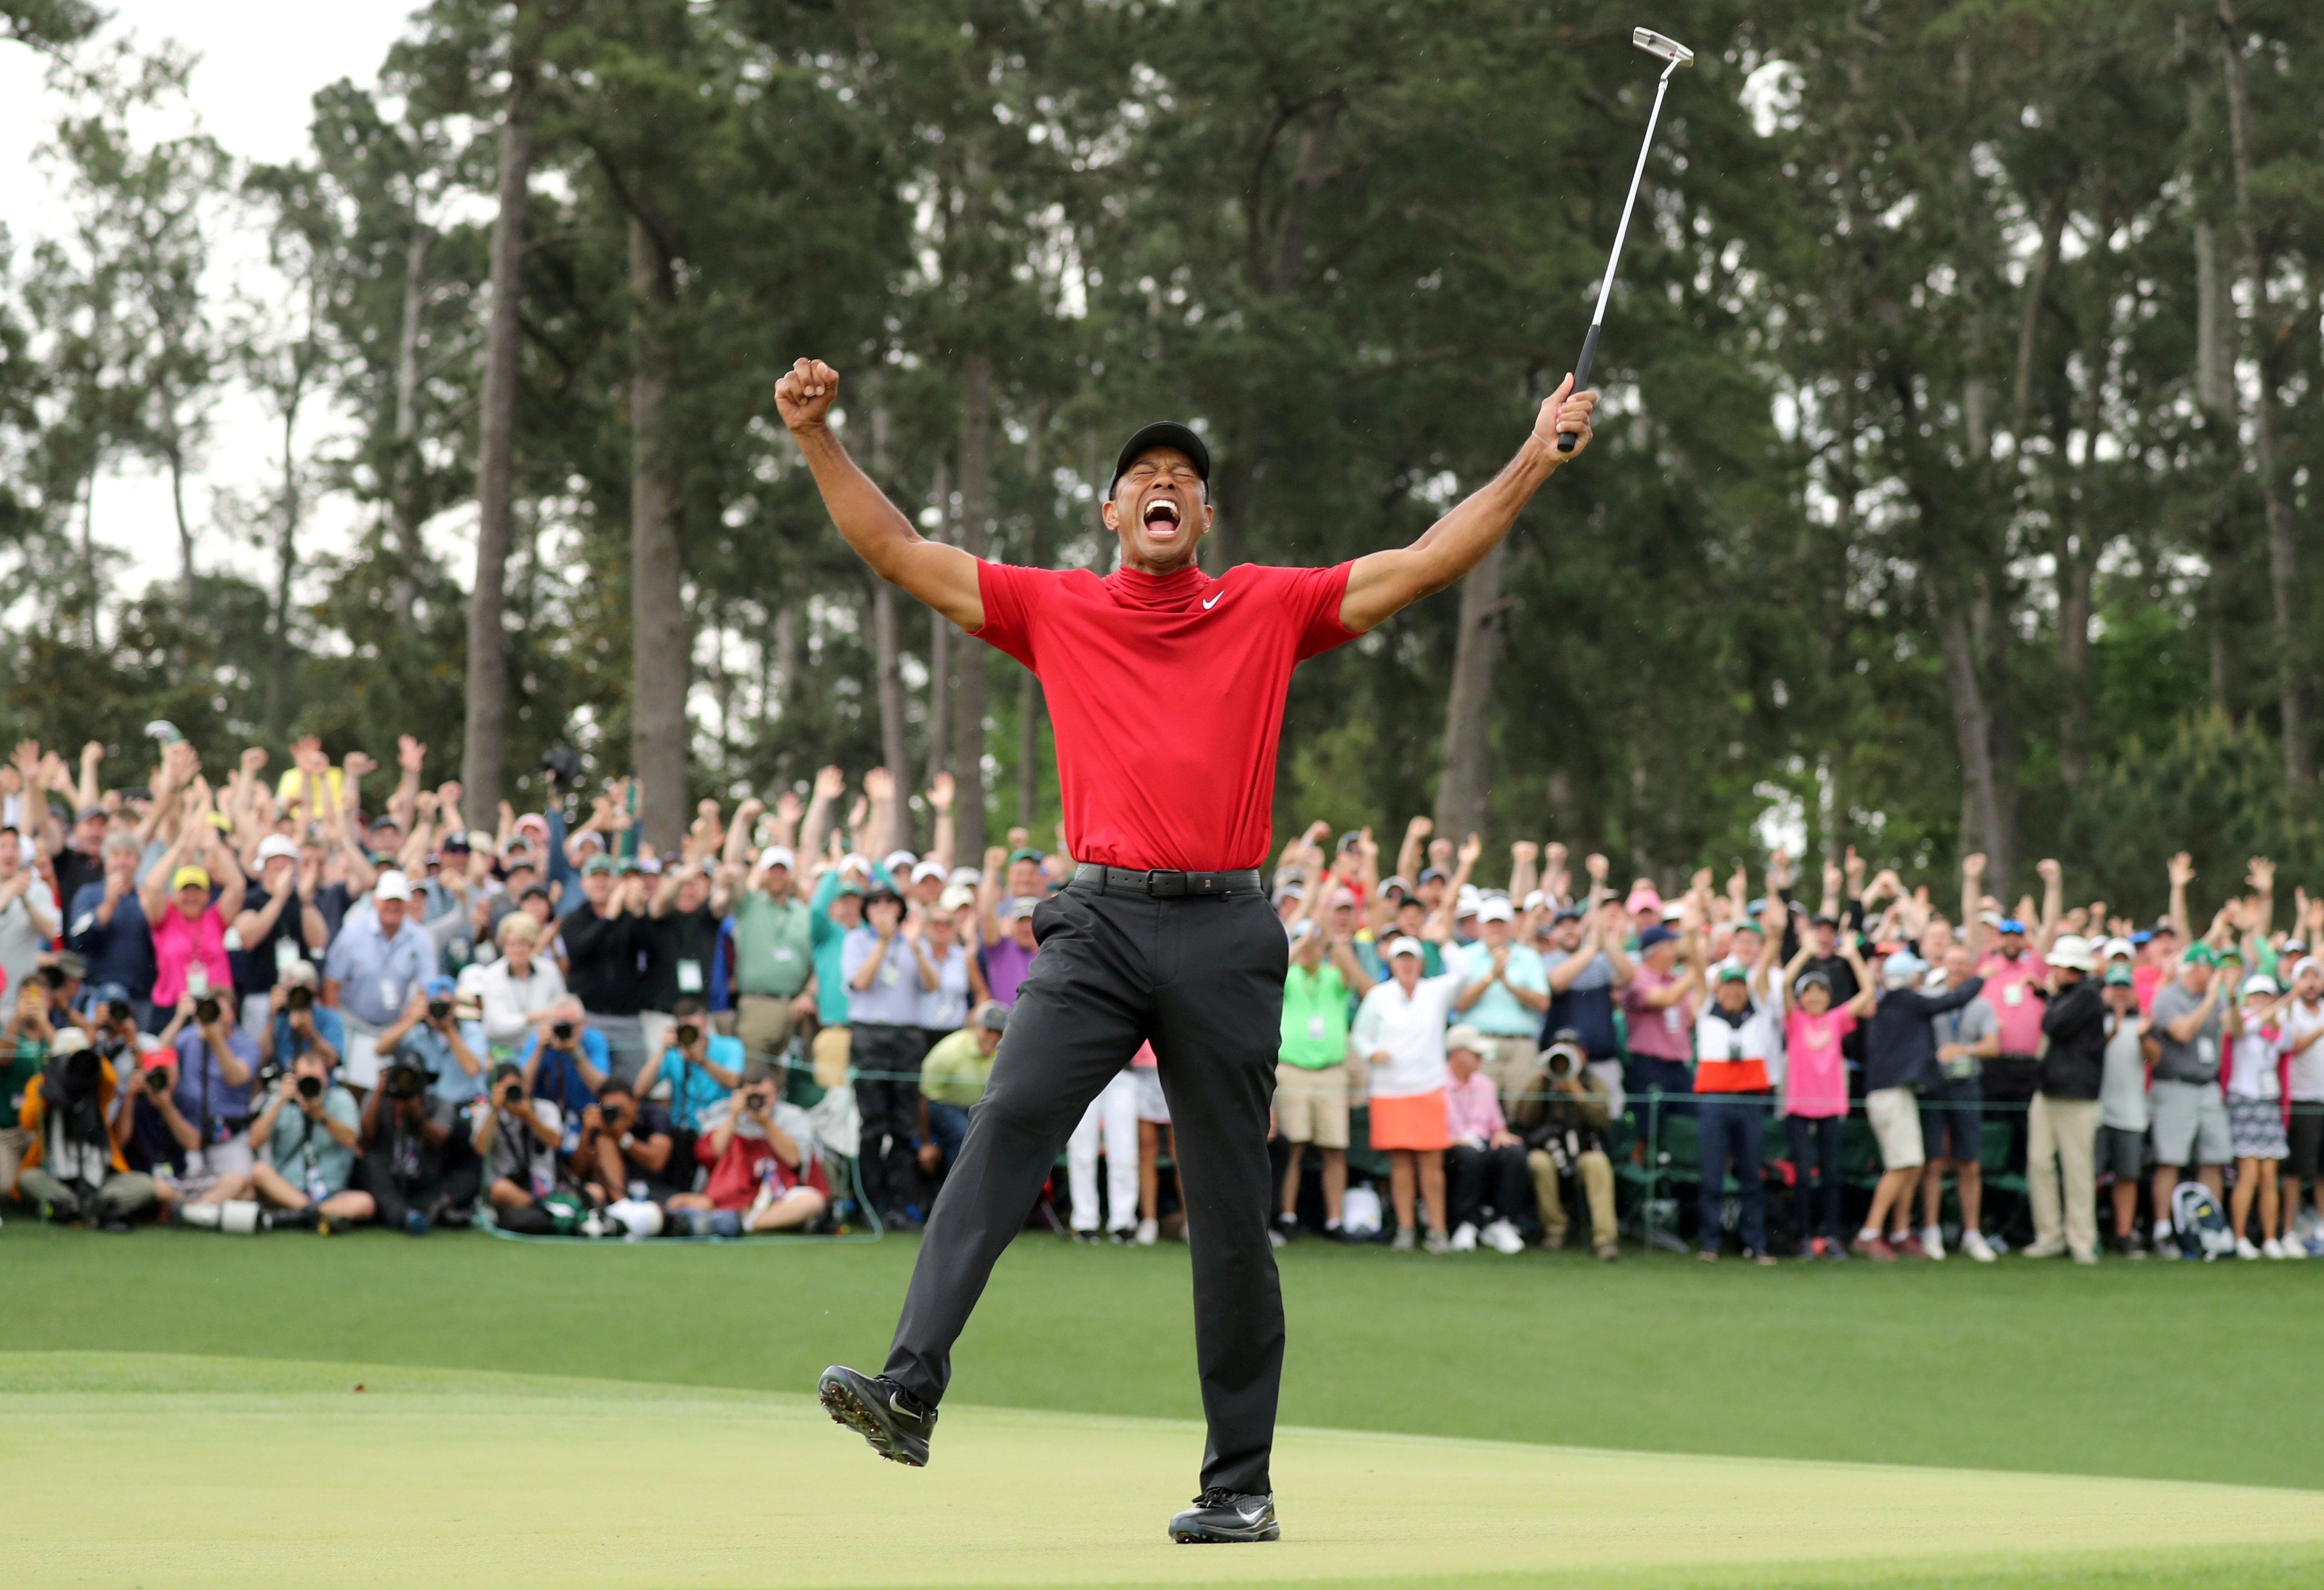 Unsettling future for golf after Tiger Woods car crash